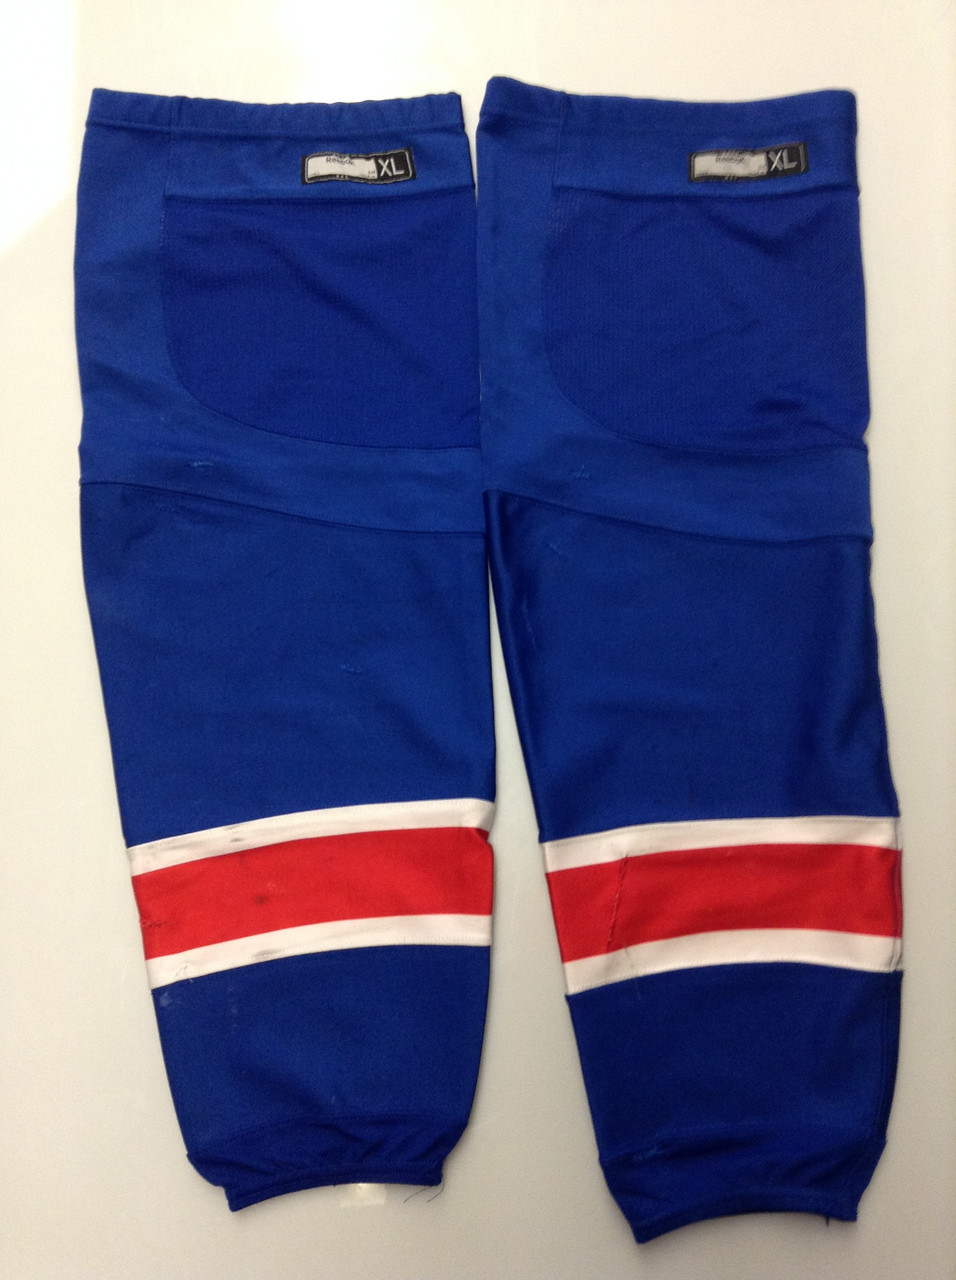 new york rangers royal blue hockey jersey pajamas